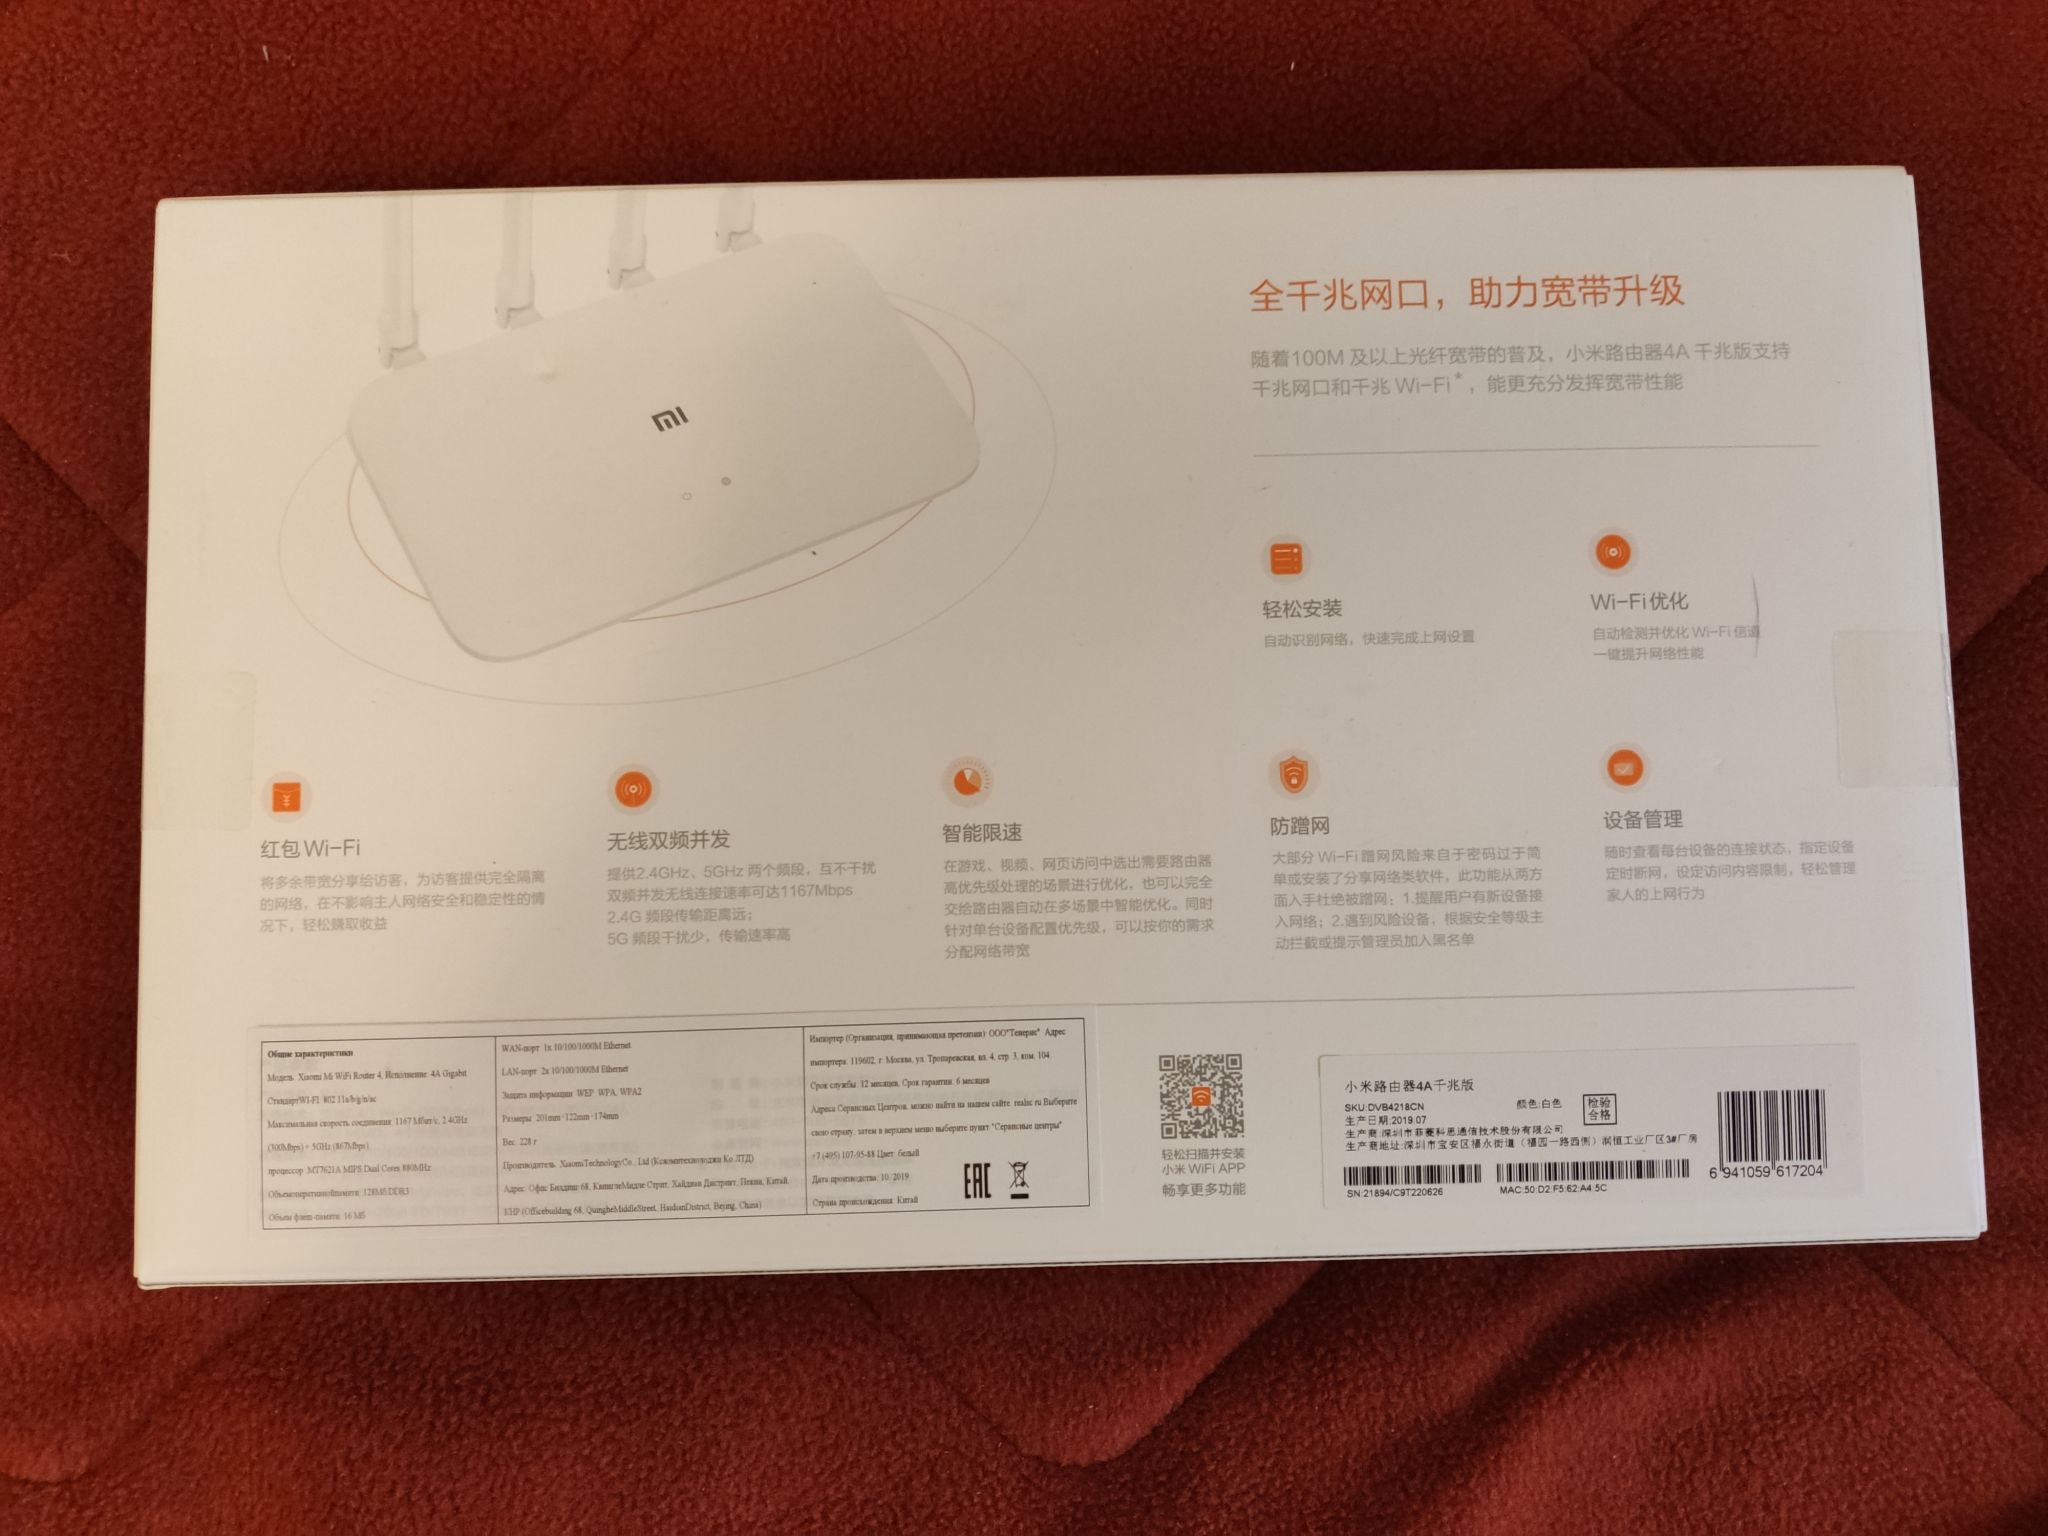 Xiaomi wifi router 4a gigabit. Wi-Fi роутер 4a Gigabit Edition. Xiaomi 4a роутер. Роутер Xiaomi 4a Gigabit. Xiaomi mi WIFI Router 4a Gigabit Edition.